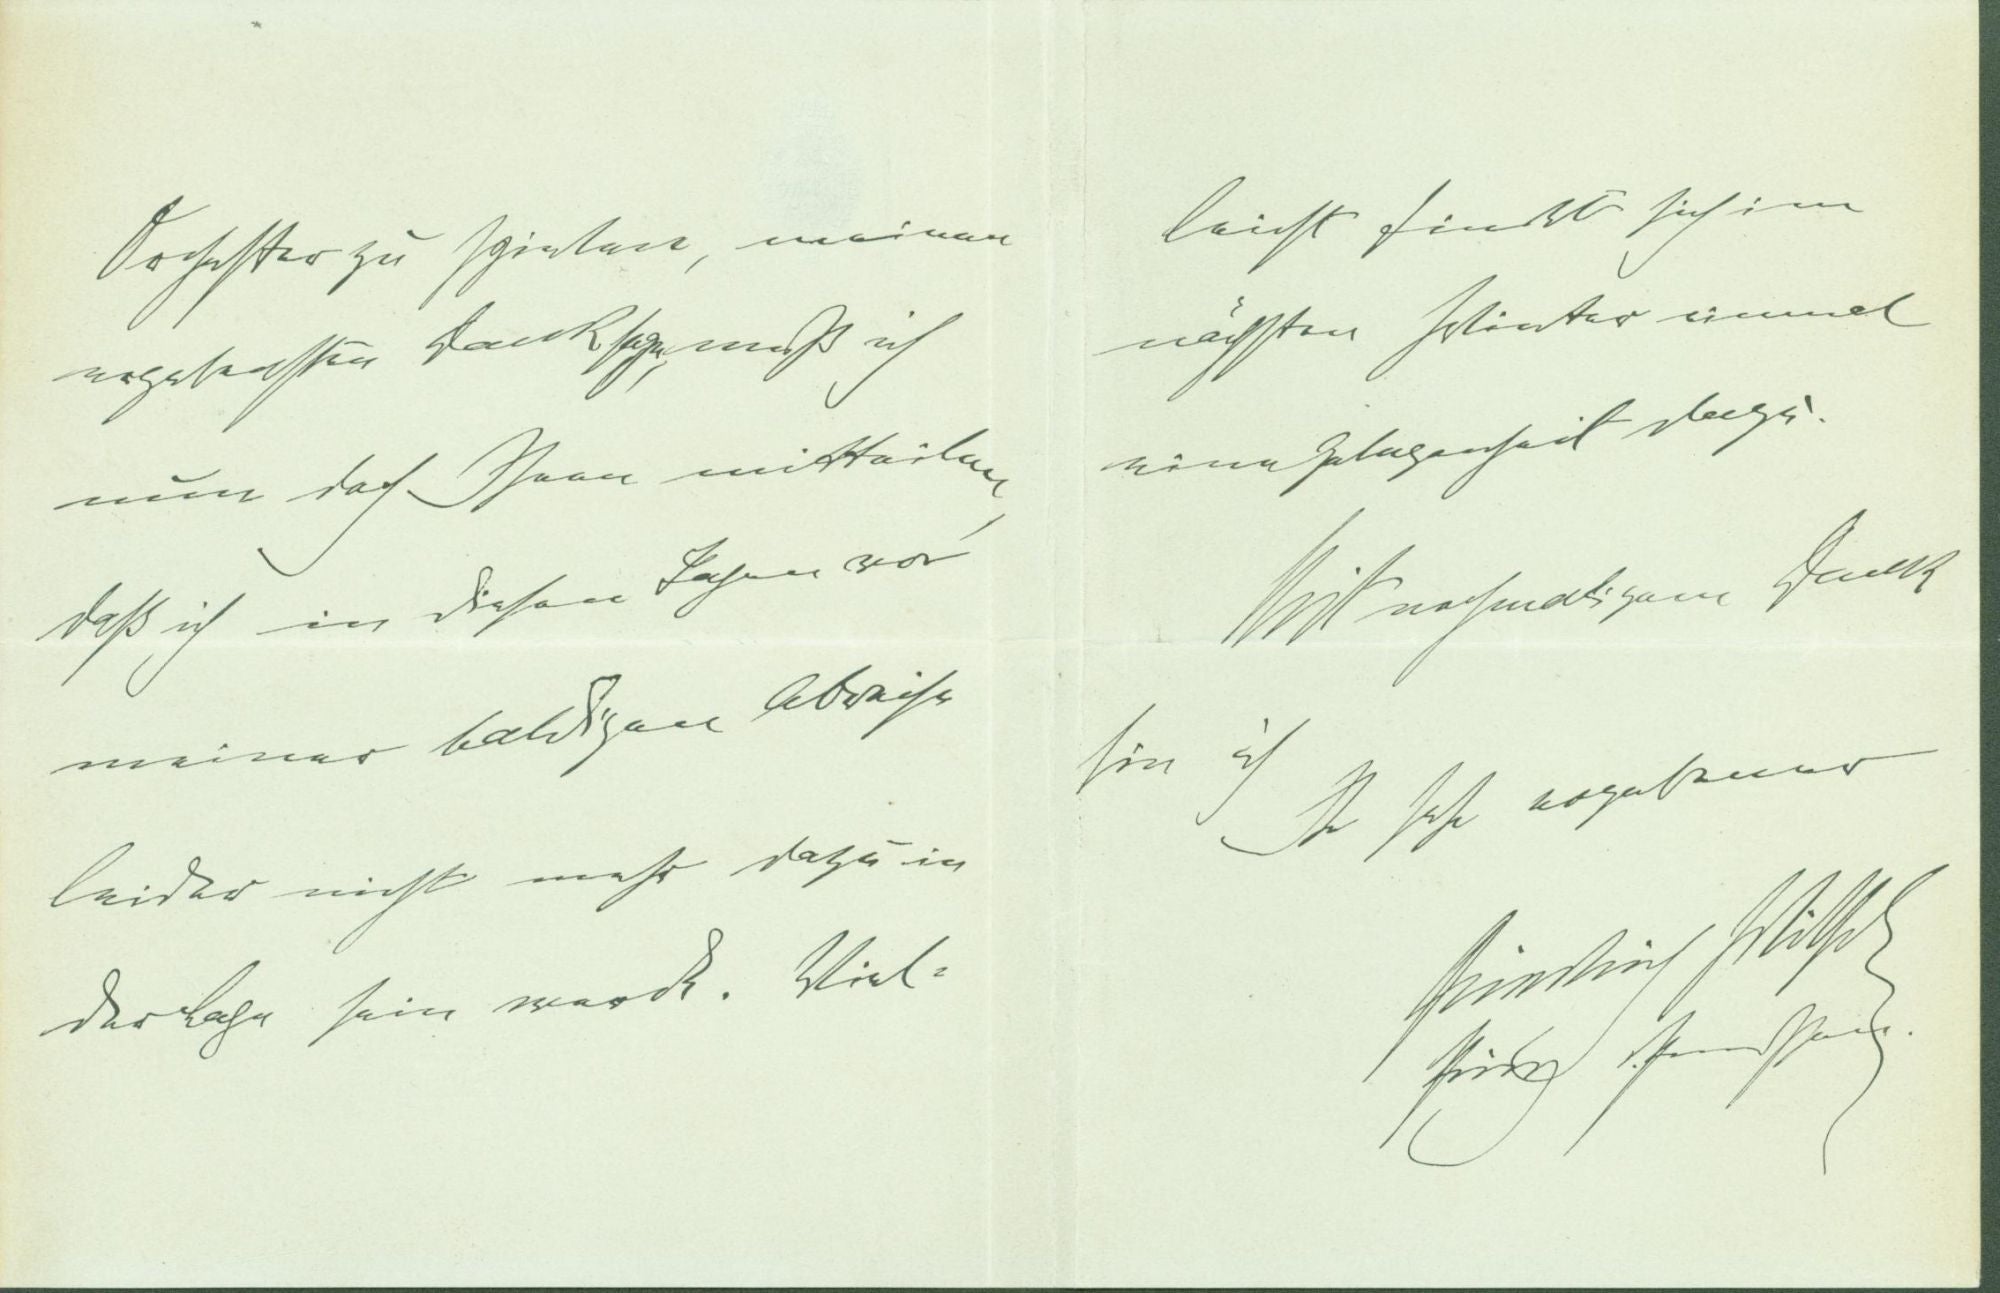 Queen Victoria Autograph Letter Signed